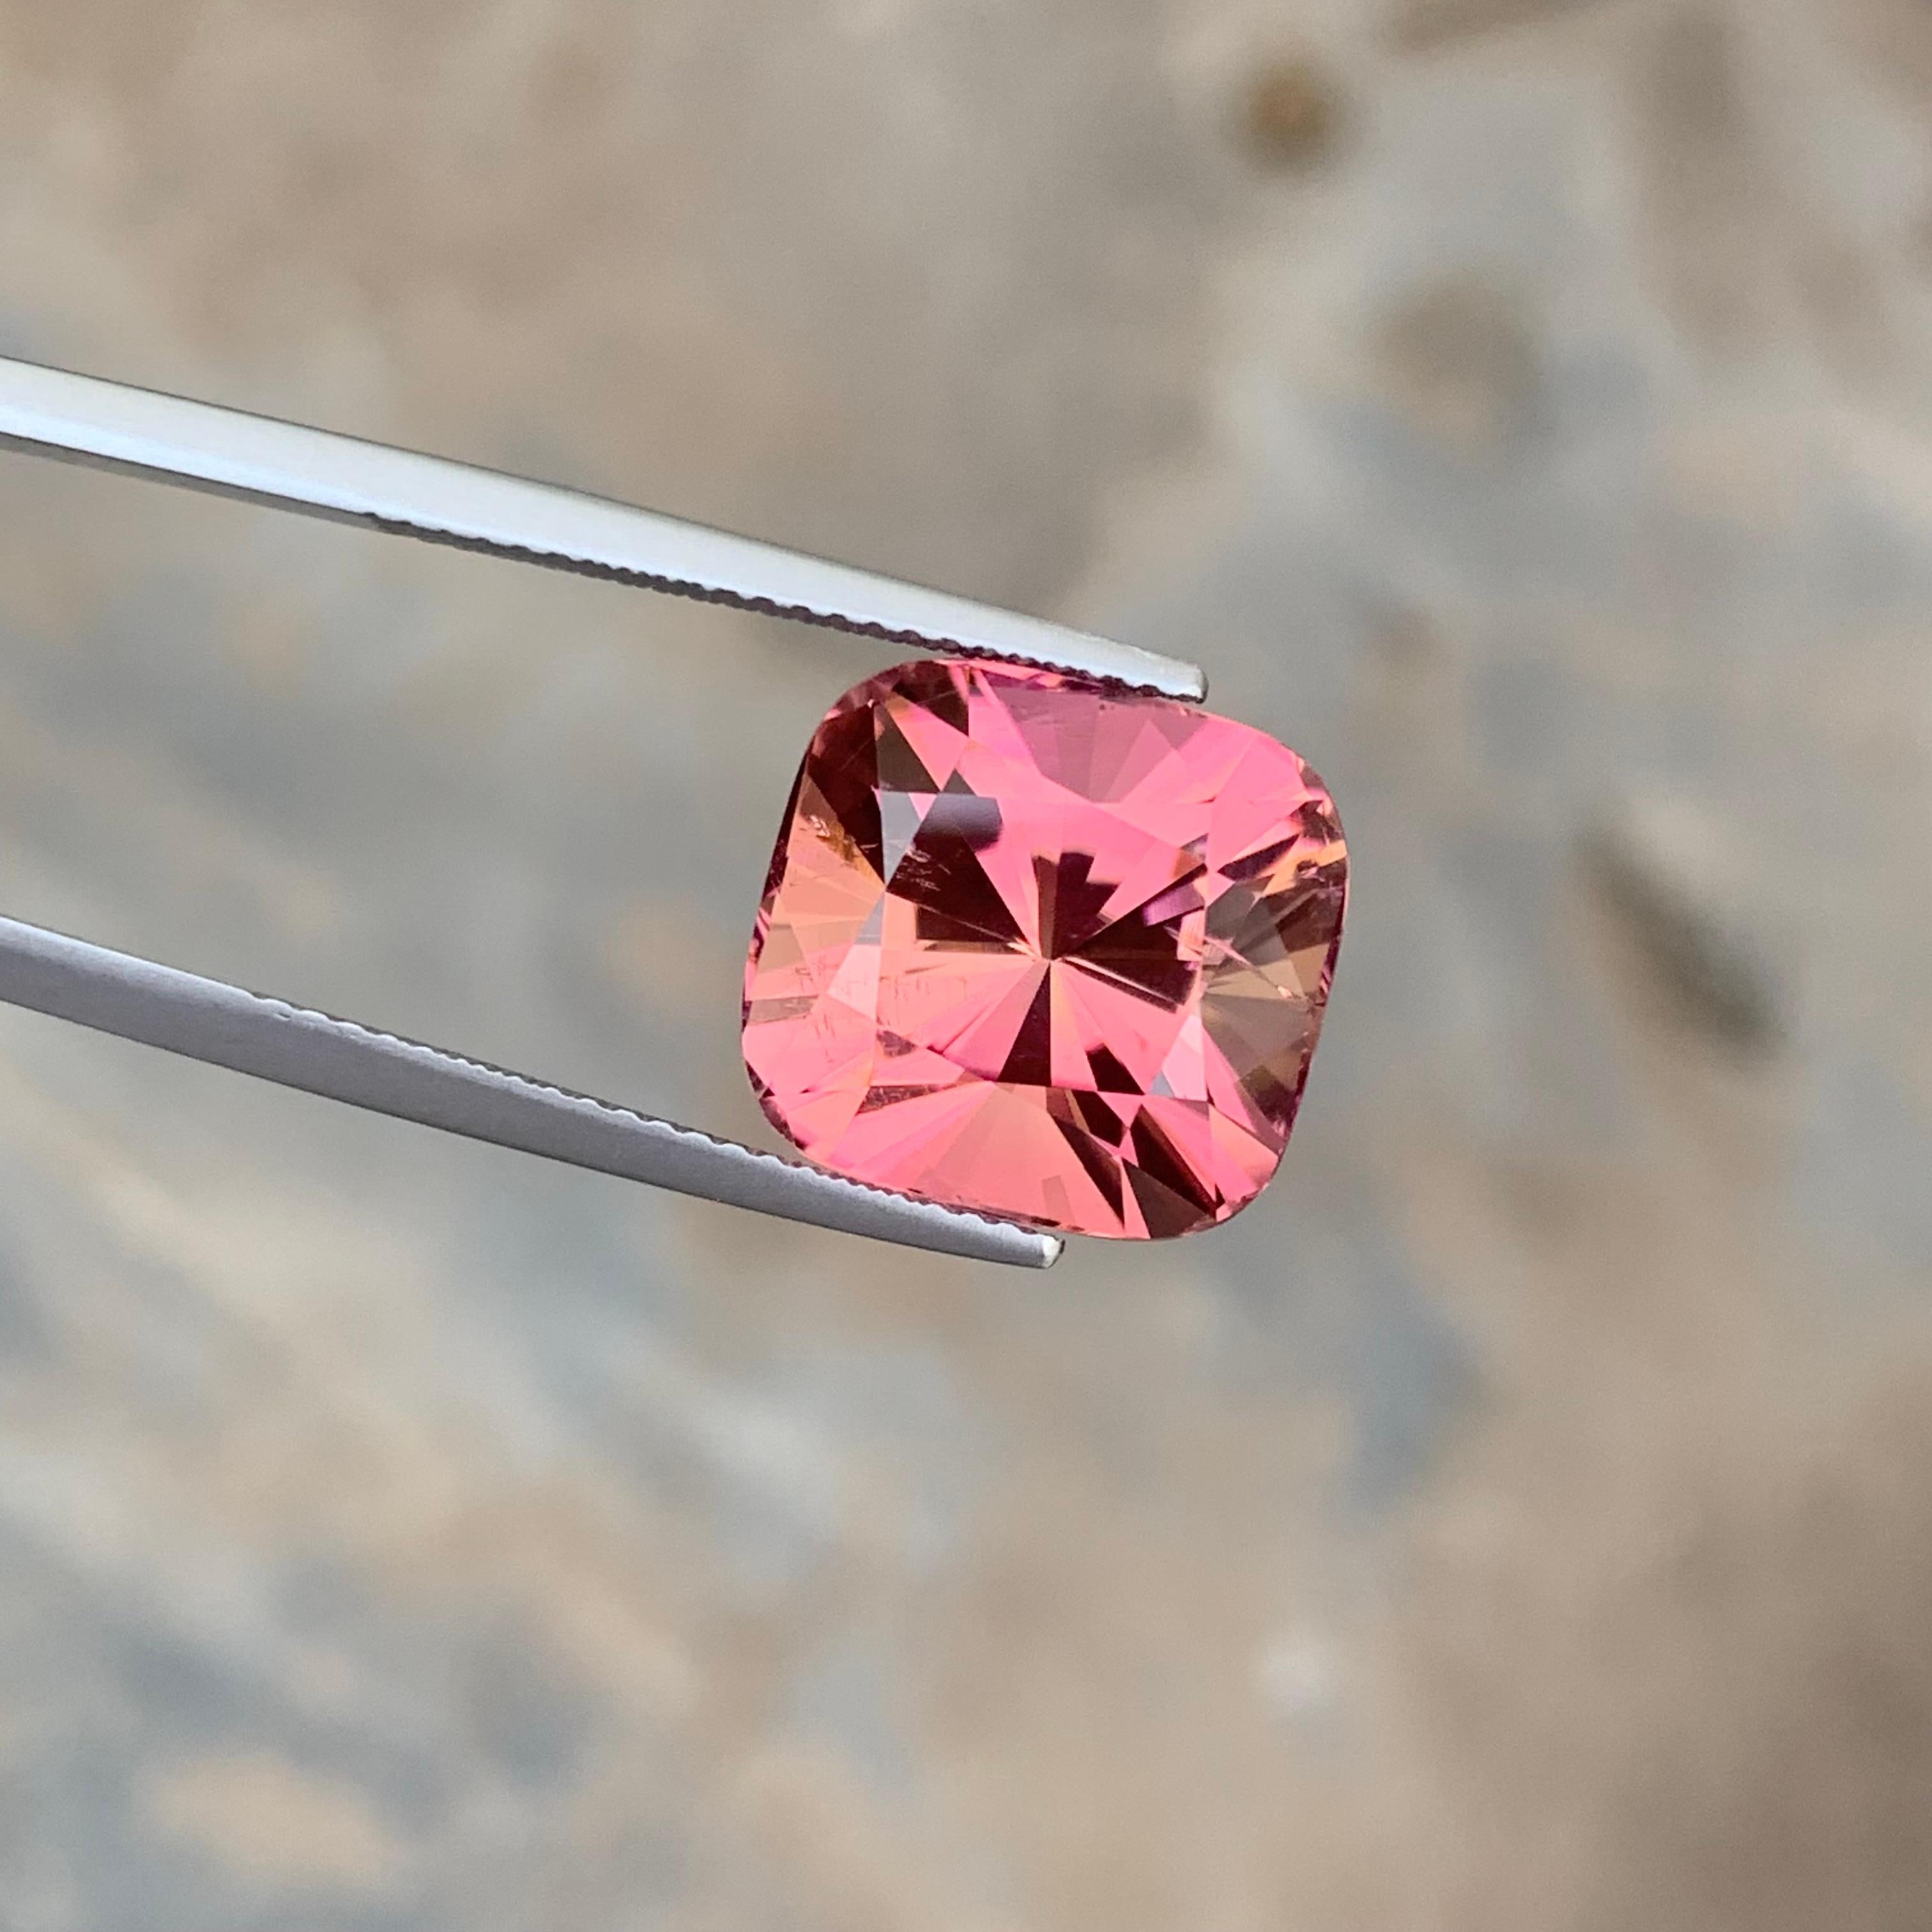 11.55 Carat Natural Loose Fancy Cut Pink Tourmaline Gemstone From Kunar Mine For Sale 5